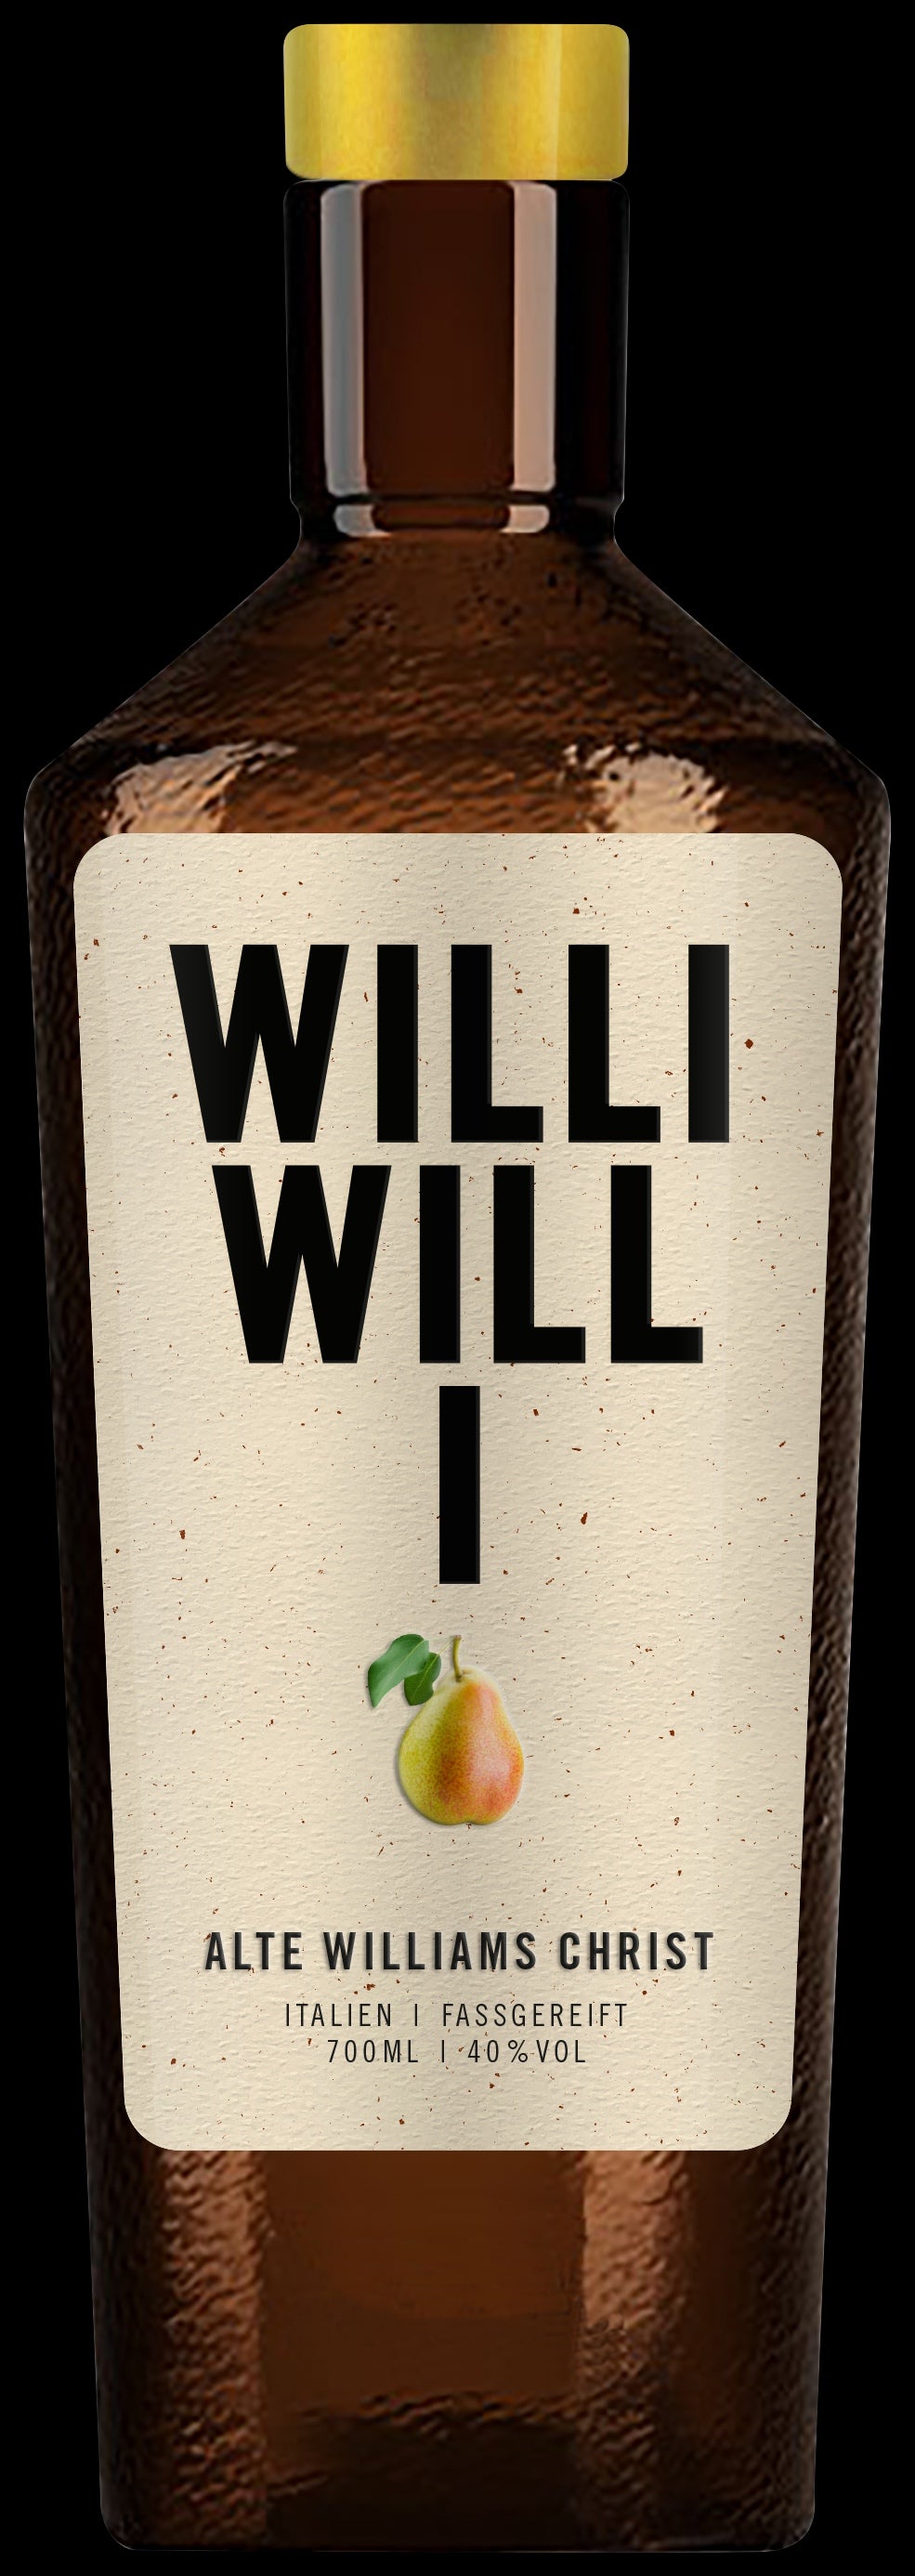 WILLI WILL I Alte Williams Christ Birne - 0,7L 40% - StillWine GmbH